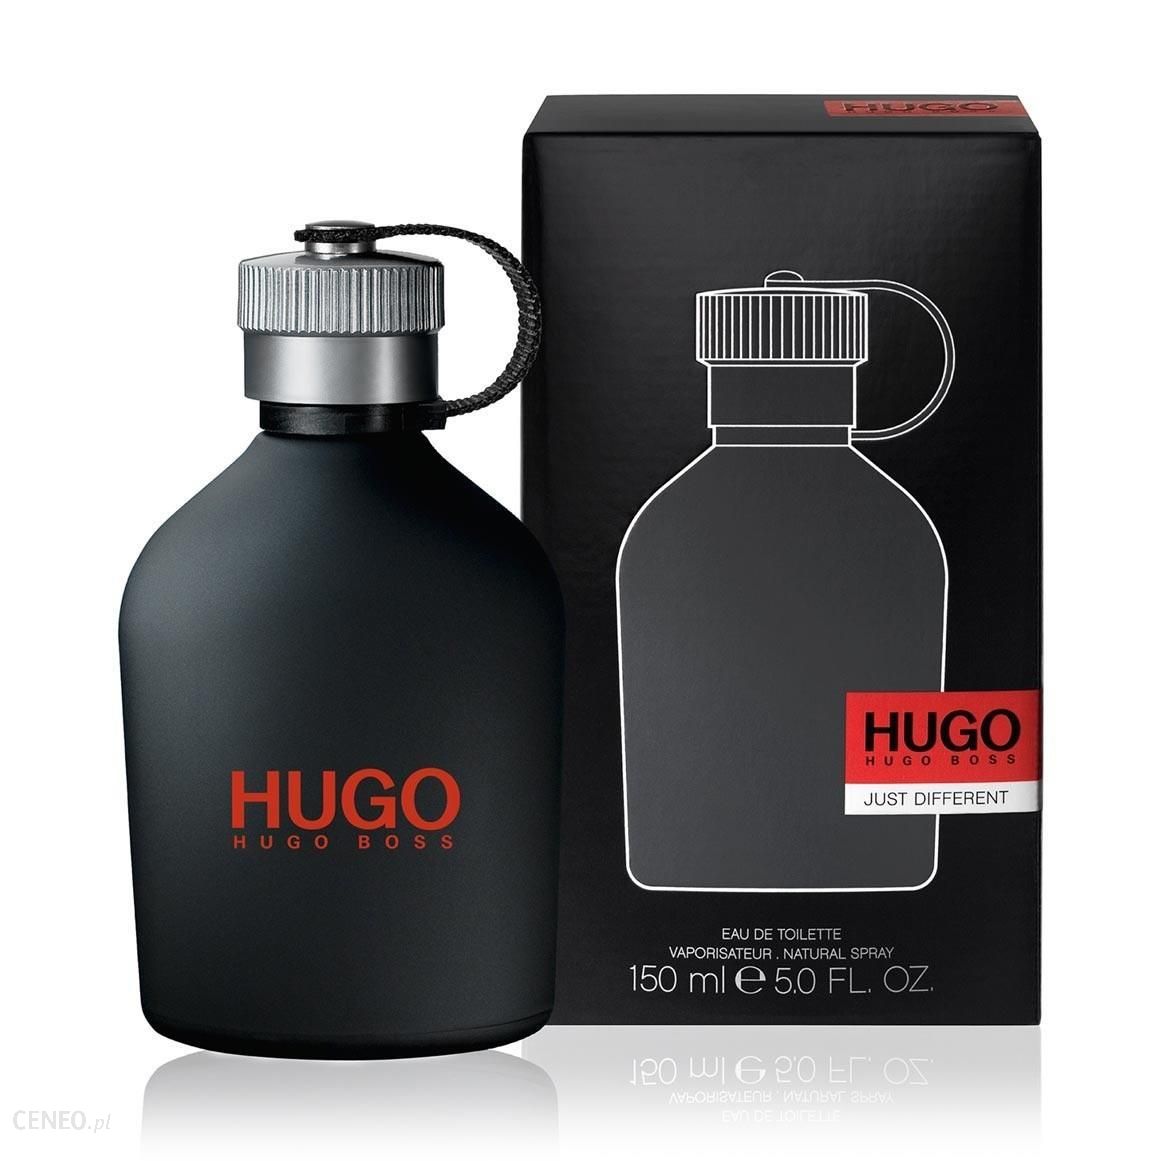 Hugo Boss Hugo Just Different Man woda toaletowa 150ml spray